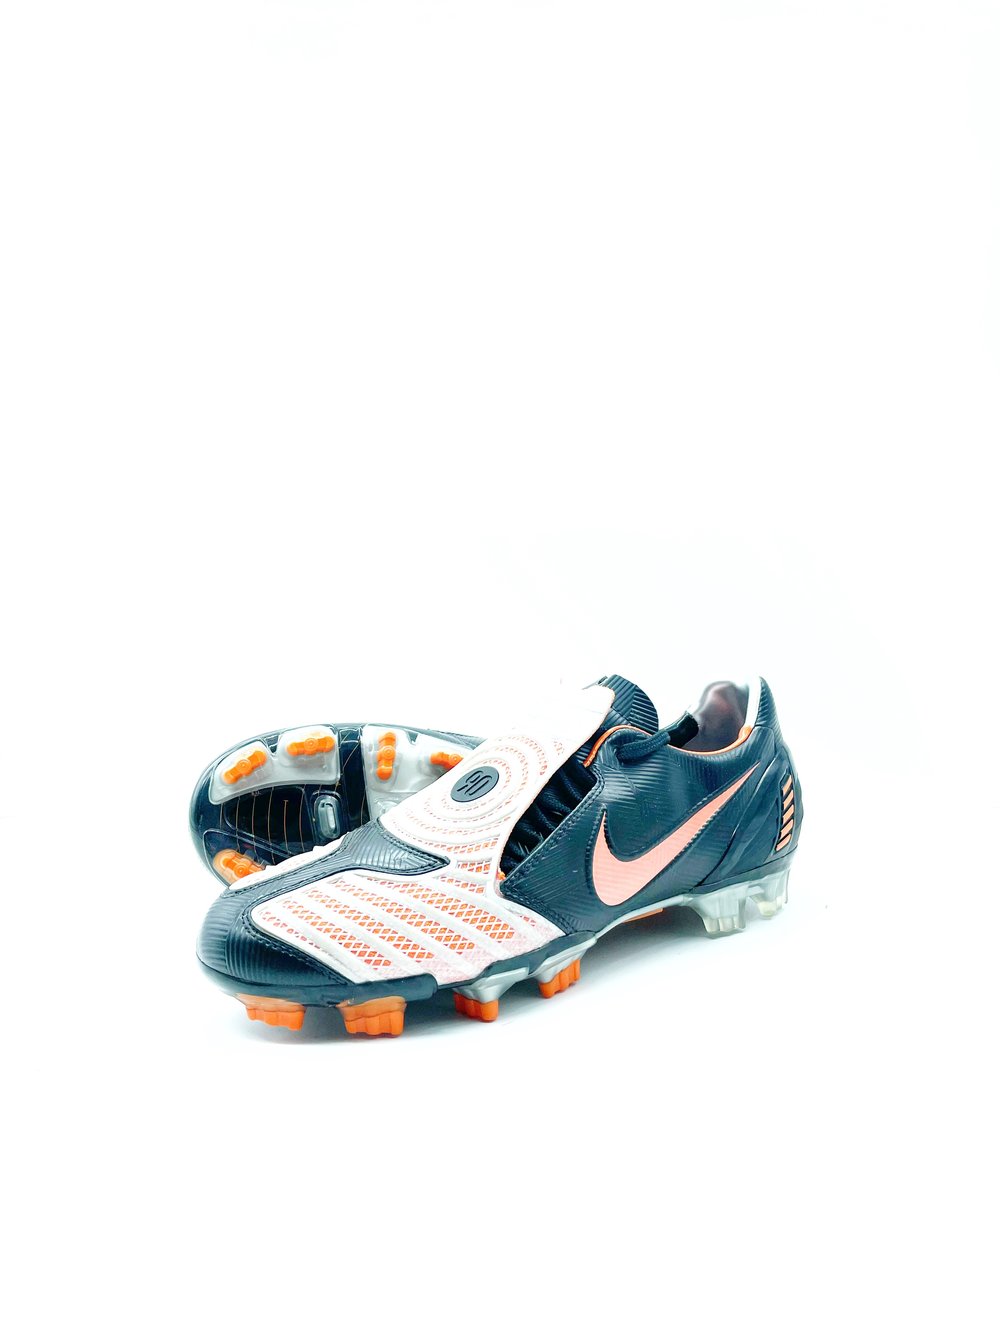 Image of Nike Total90 Laser II FG Orange